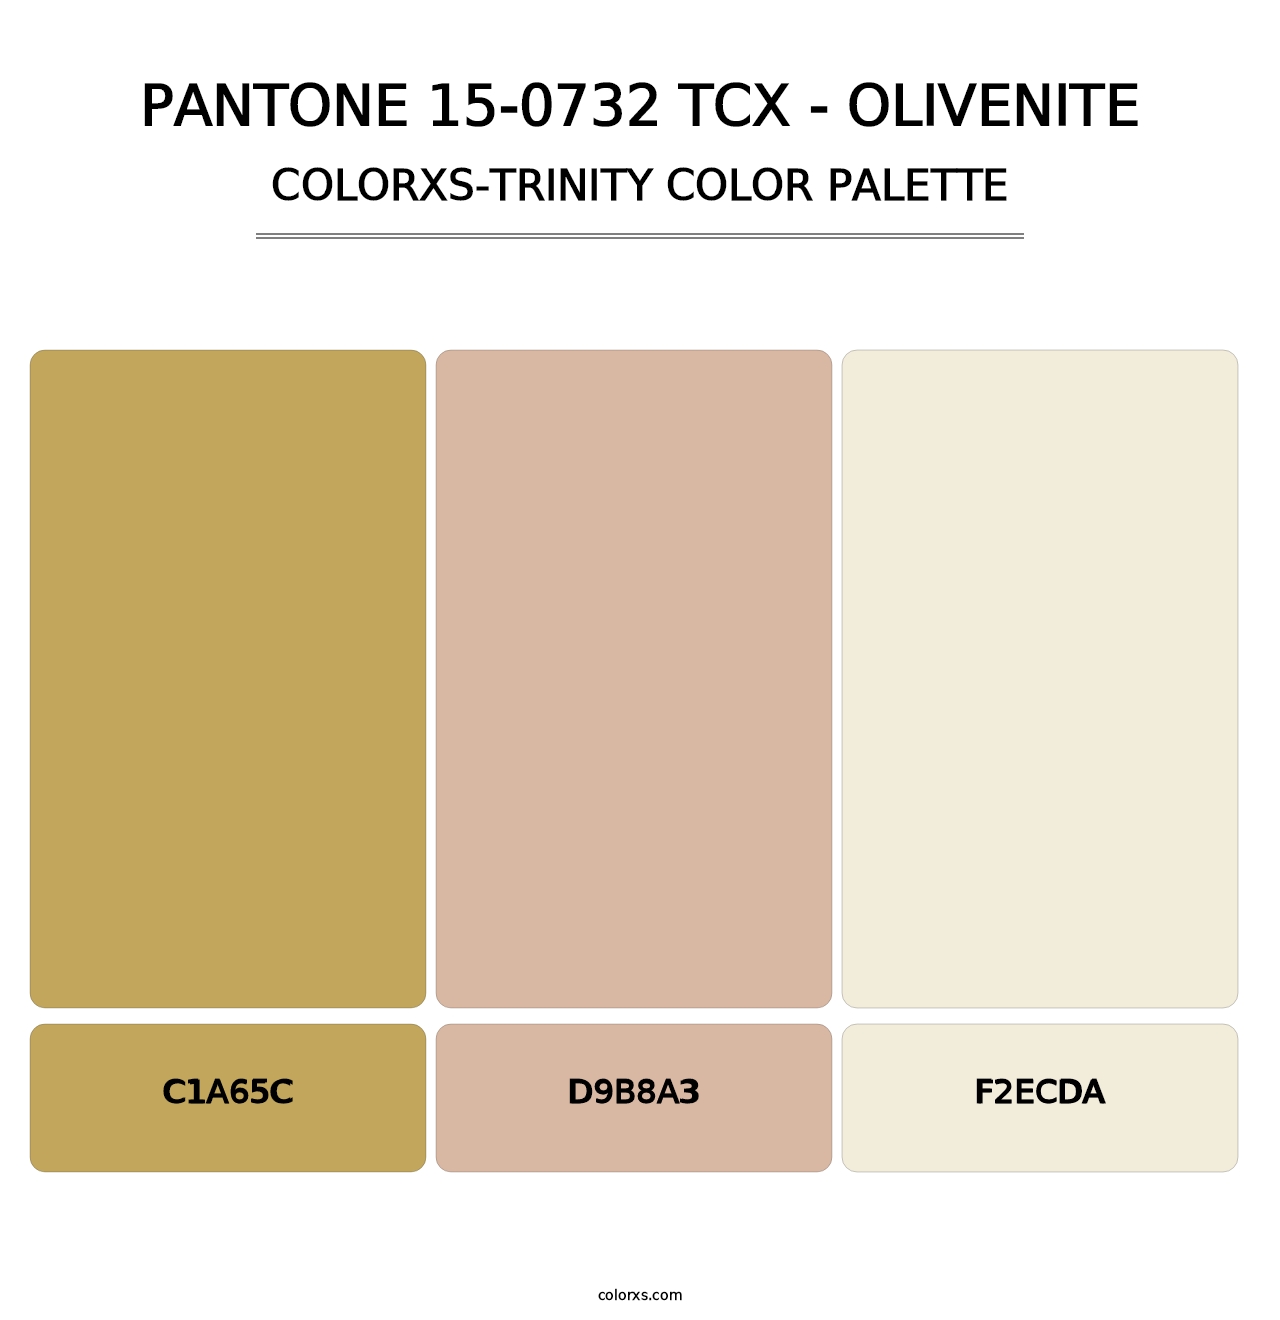 PANTONE 15-0732 TCX - Olivenite - Colorxs Trinity Palette